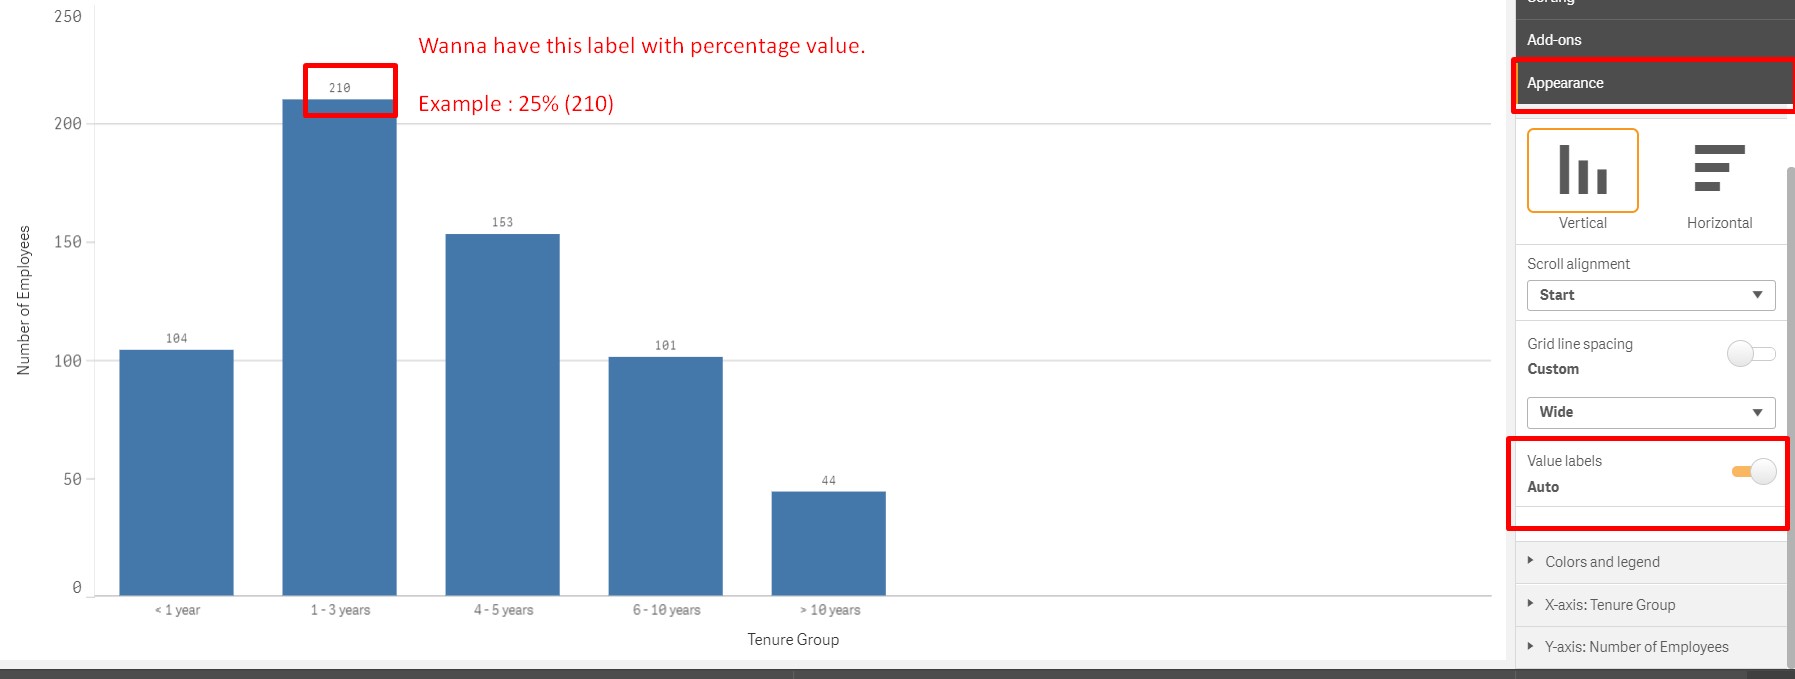 Percentage Value Label on Chart.jpg